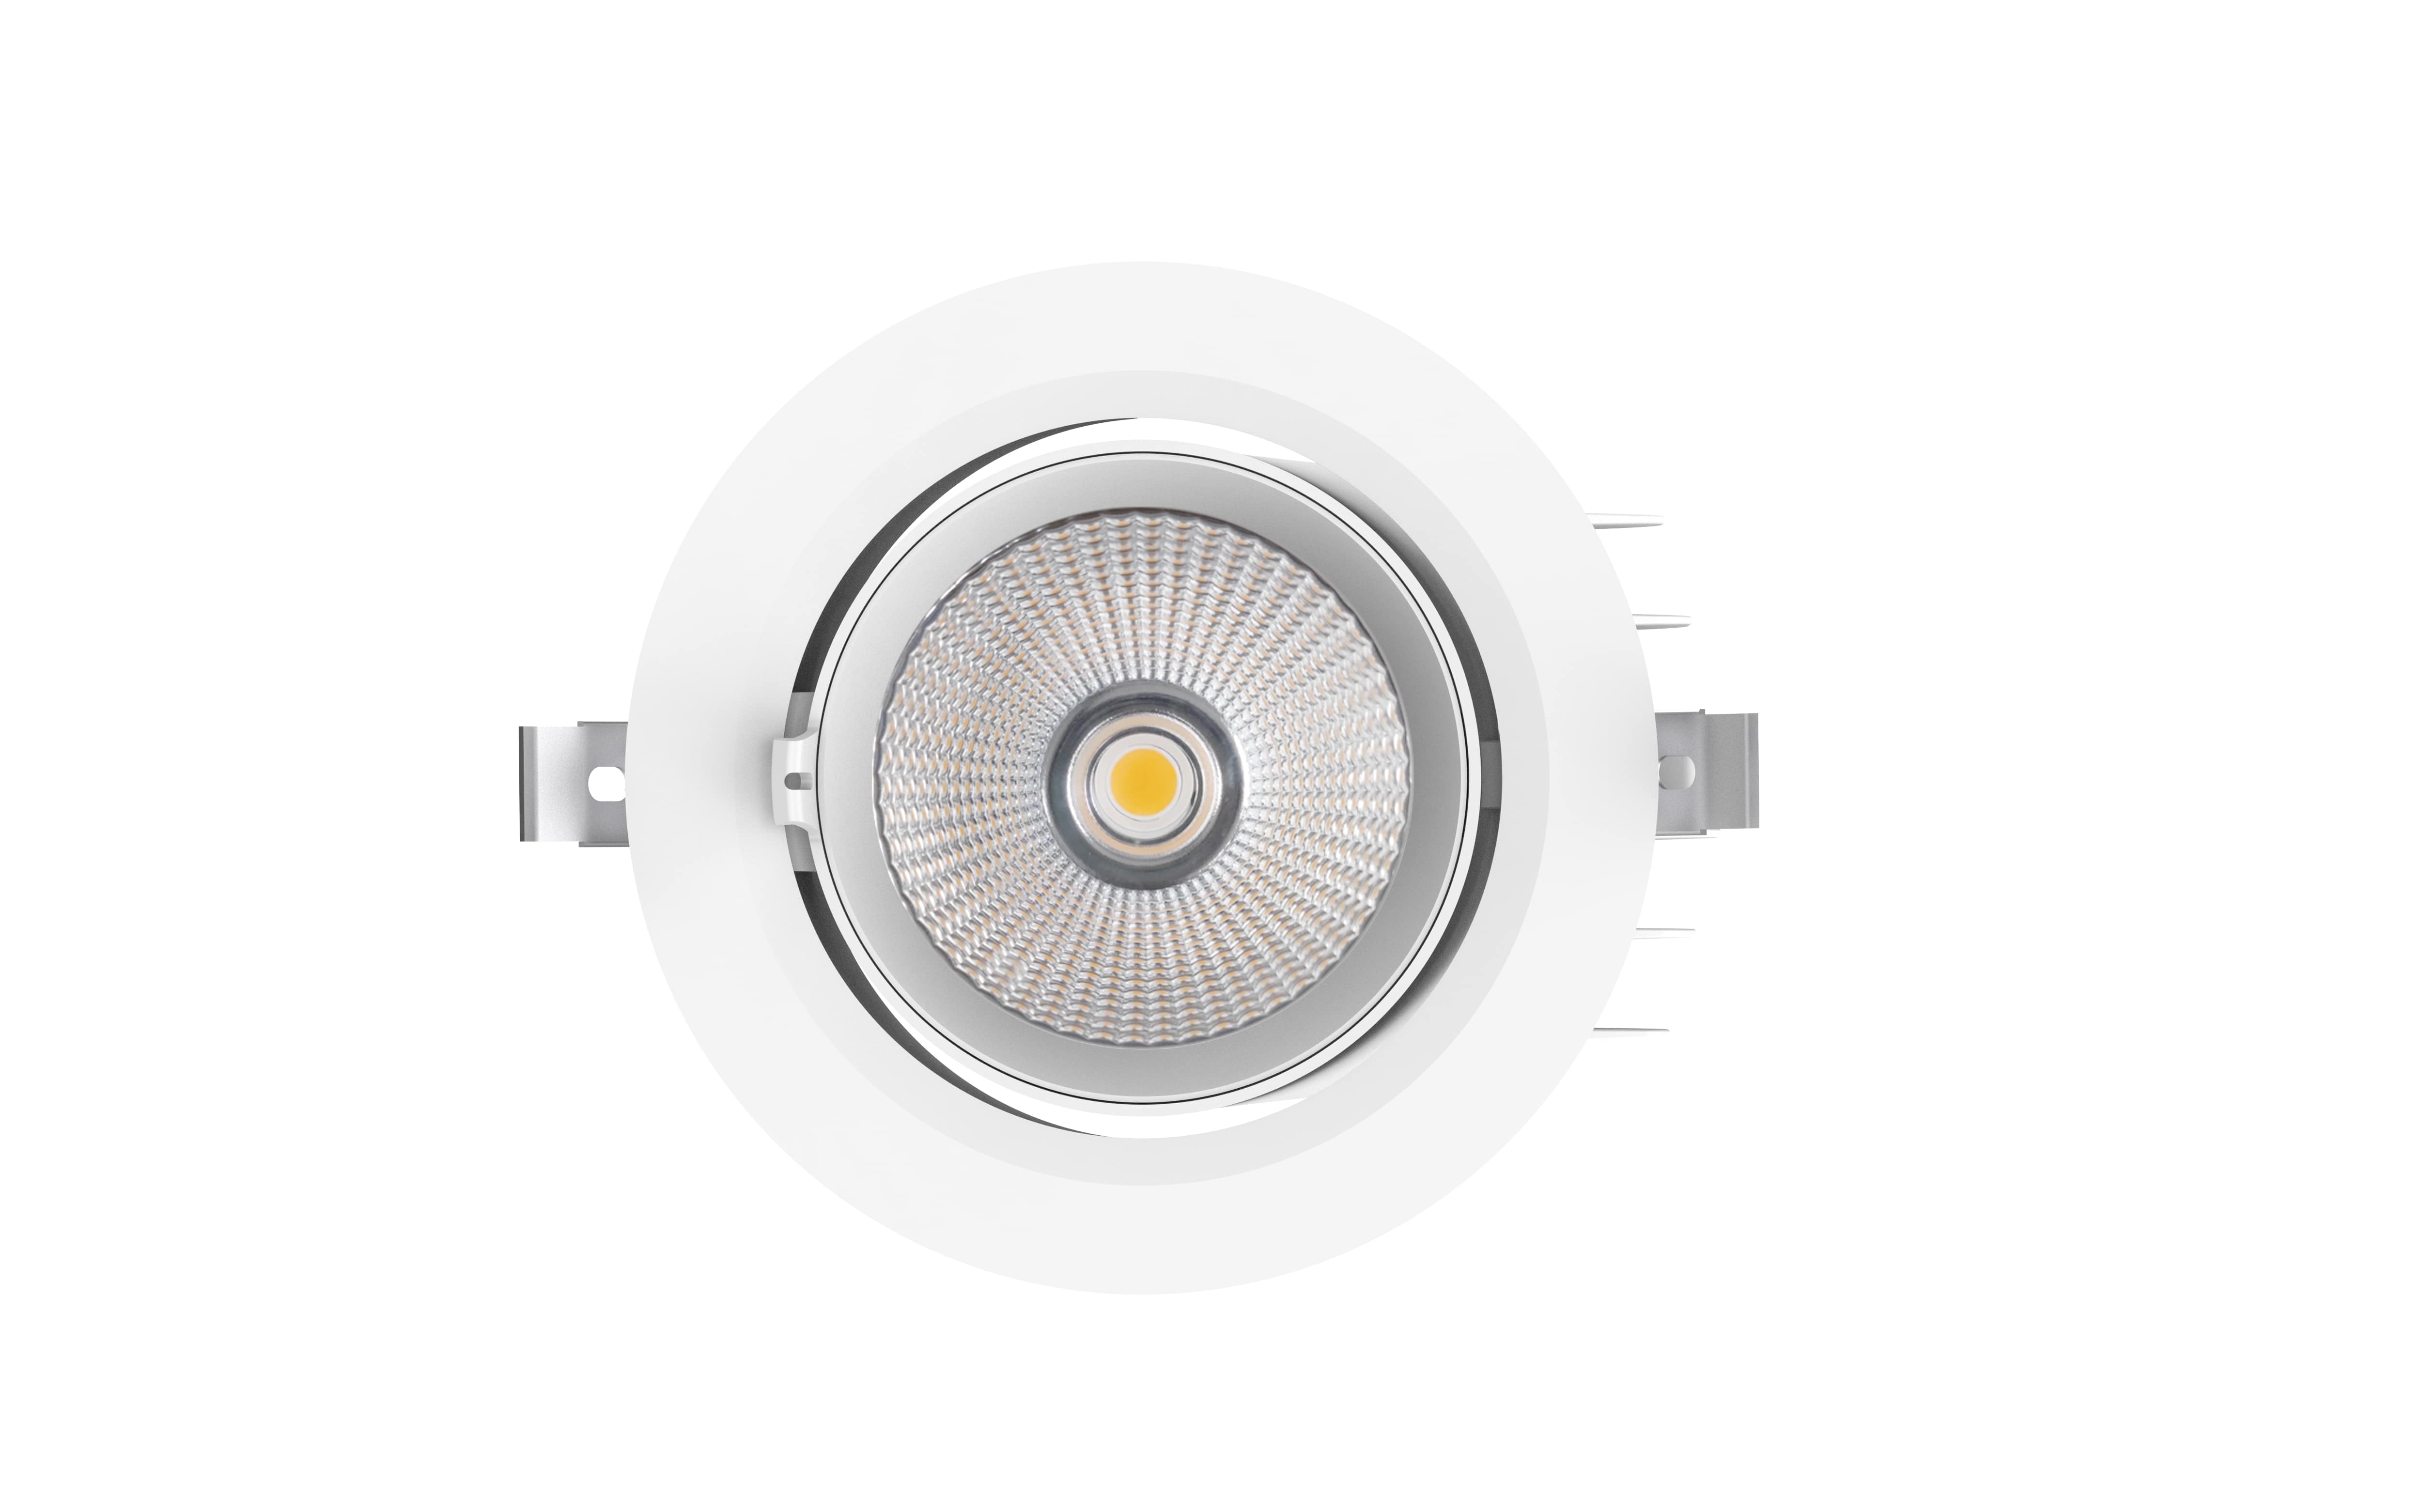 LED-Downlight MULTI 2 20-40 W, 830, 4.800 lm, 36°, PowerSwitch, 235x144 mm, Loch 200-210 mm